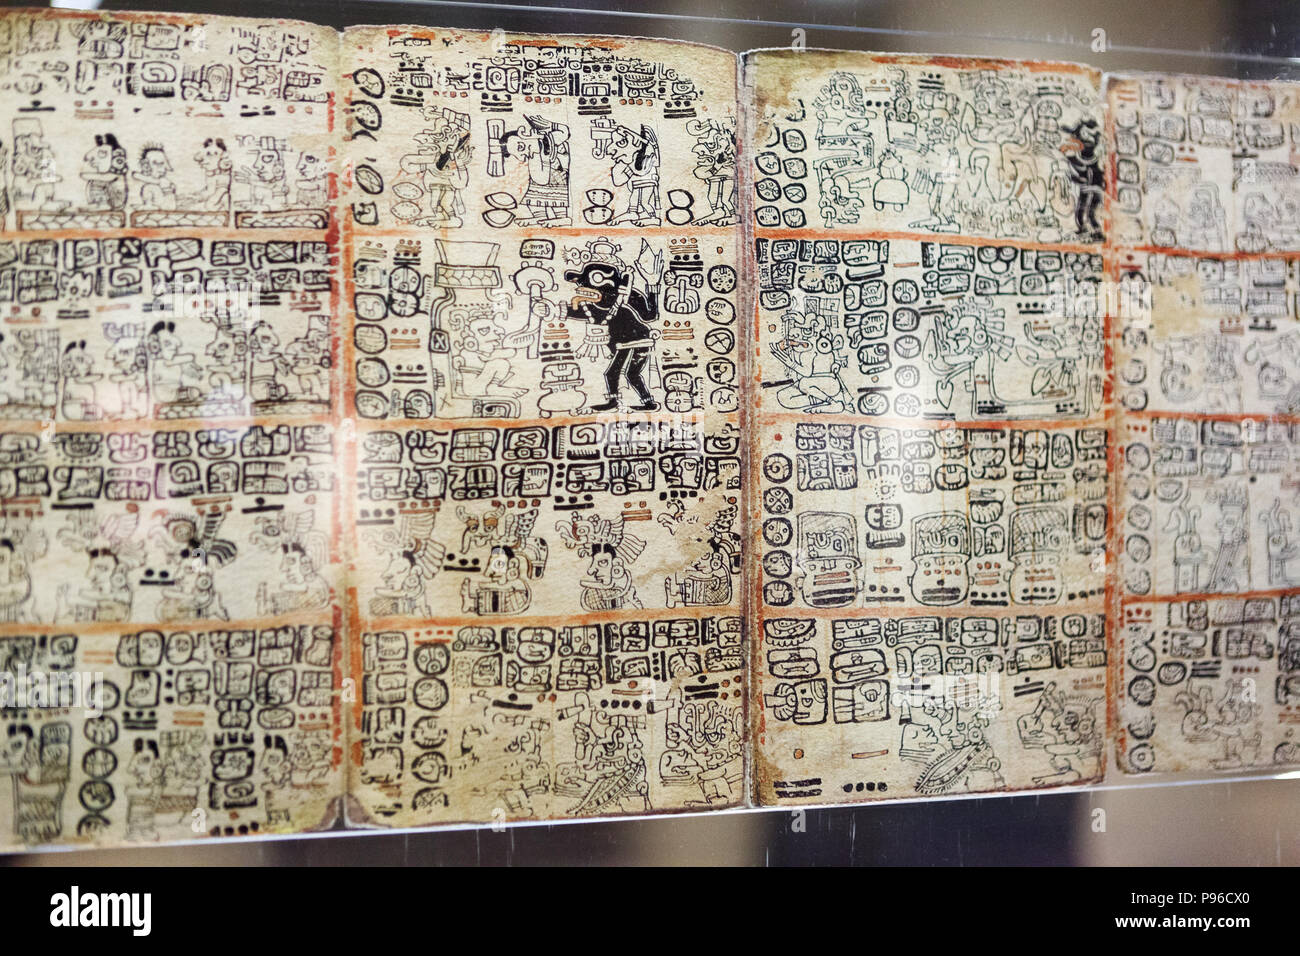 MADRID, ESPAGNE - 30 novembre 2016 : fragment de livre Maya - Le codex de Madrid (aussi connu sous le nom de Codex Tro-Cortesianus Codex Troano ou l). Espagne Banque D'Images